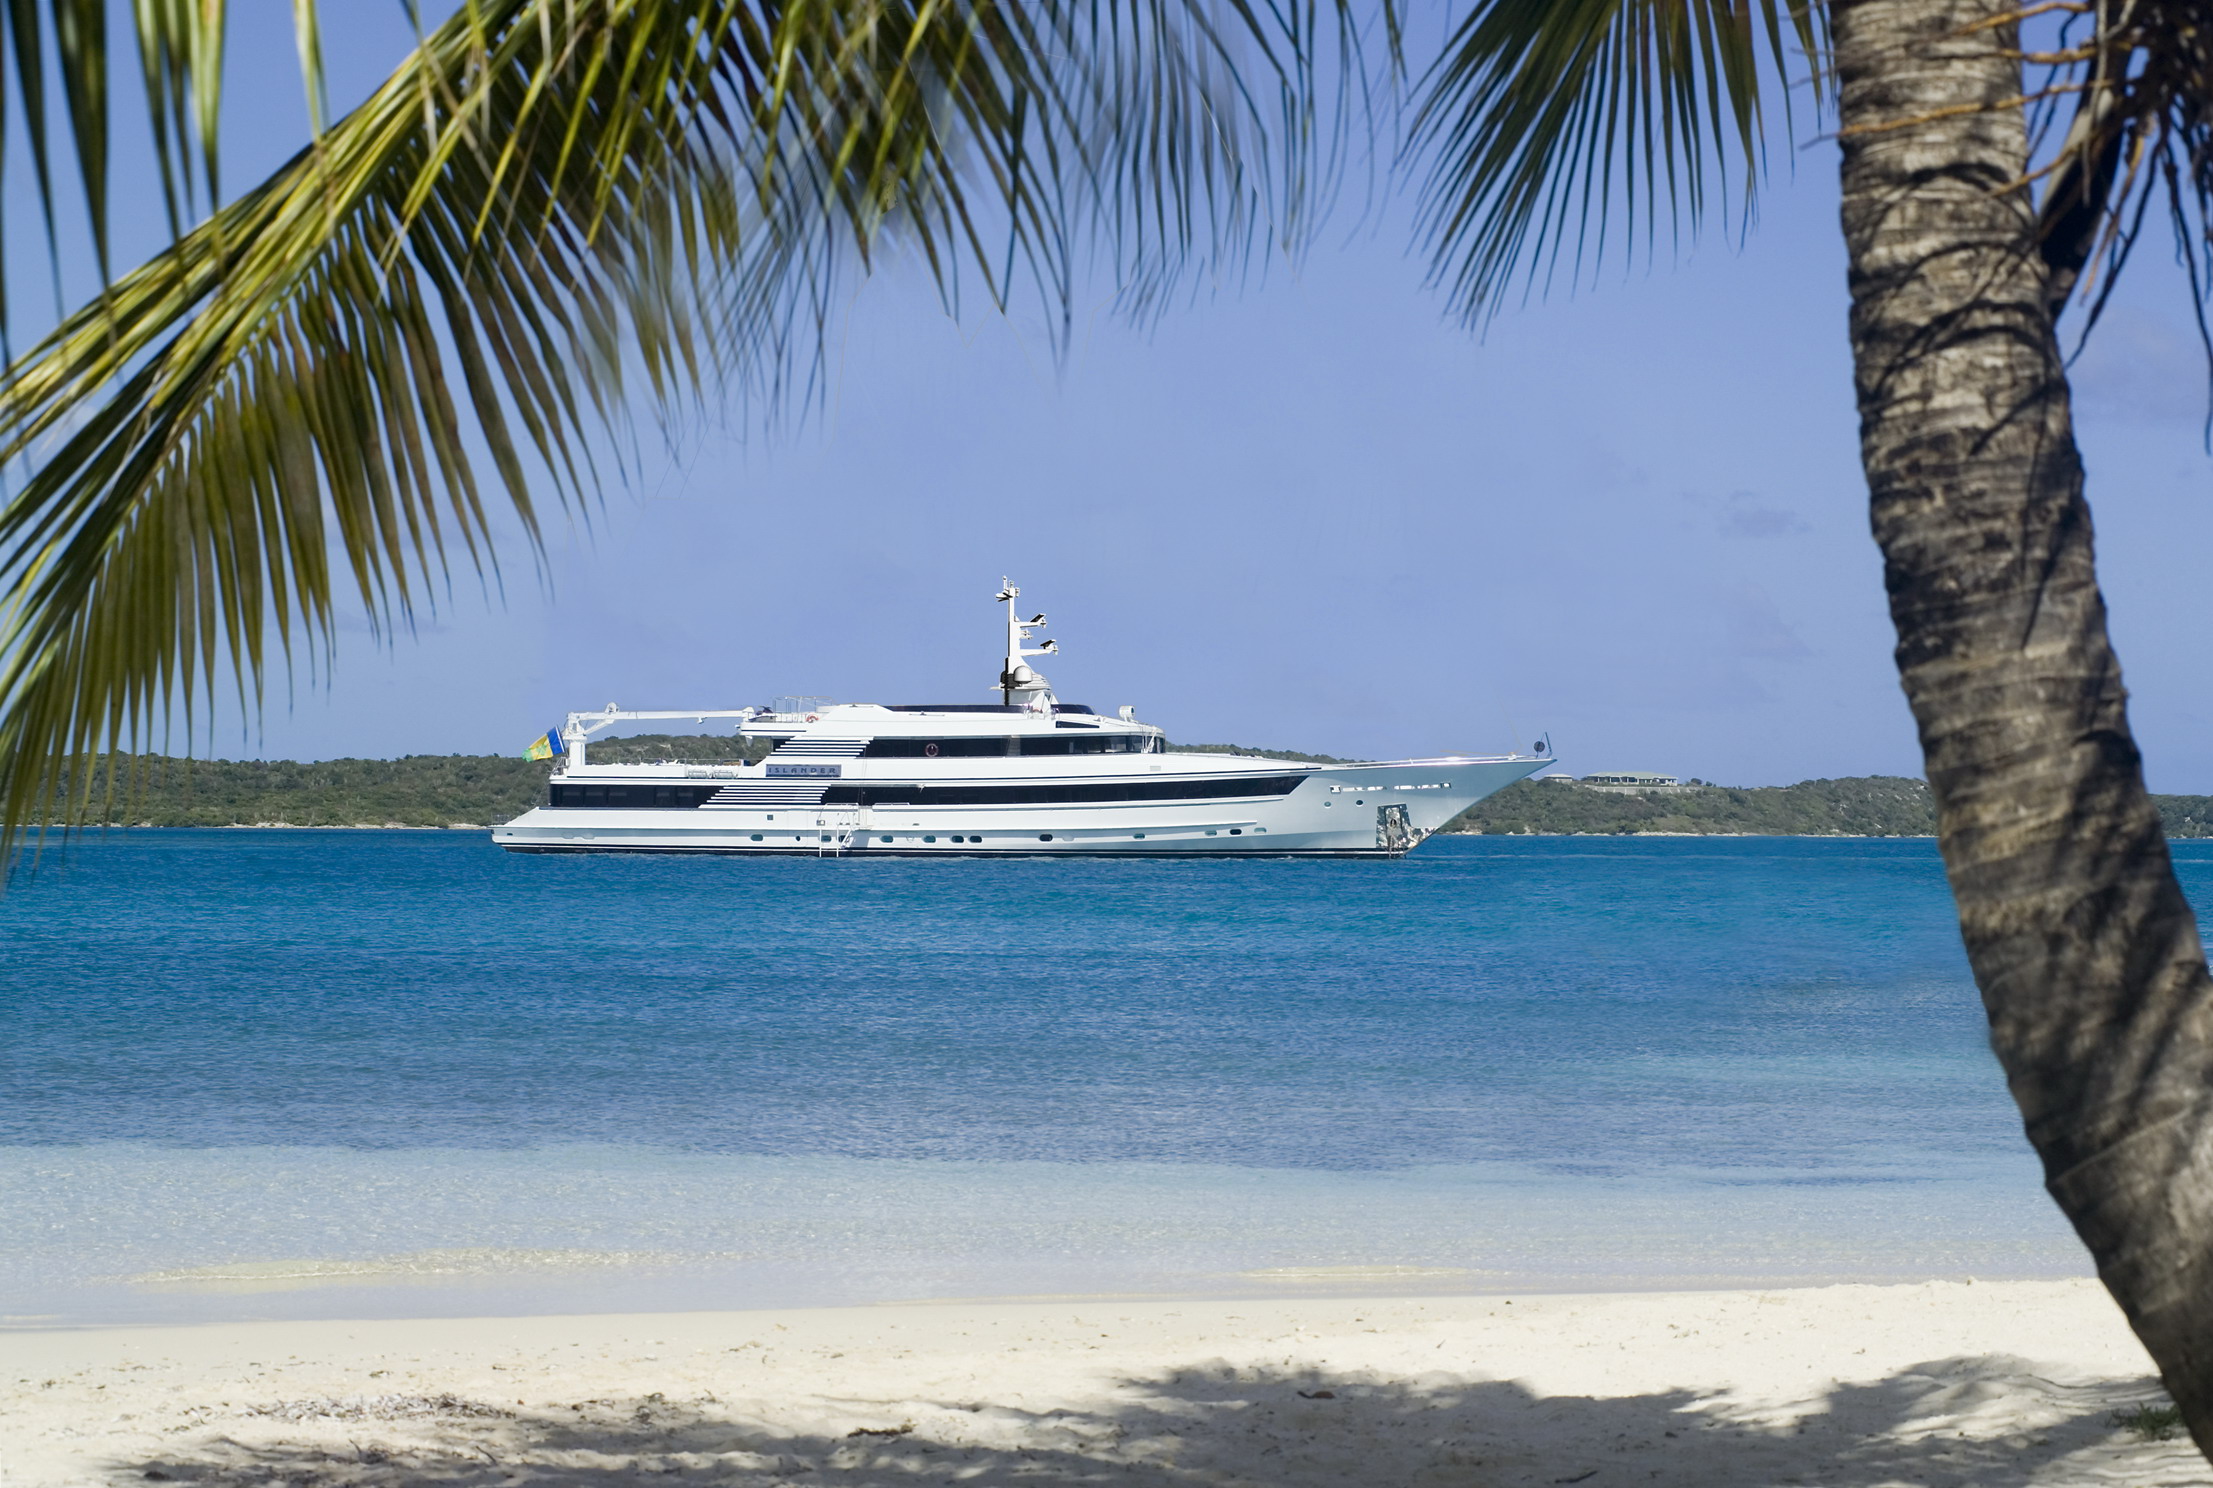 the islander yacht